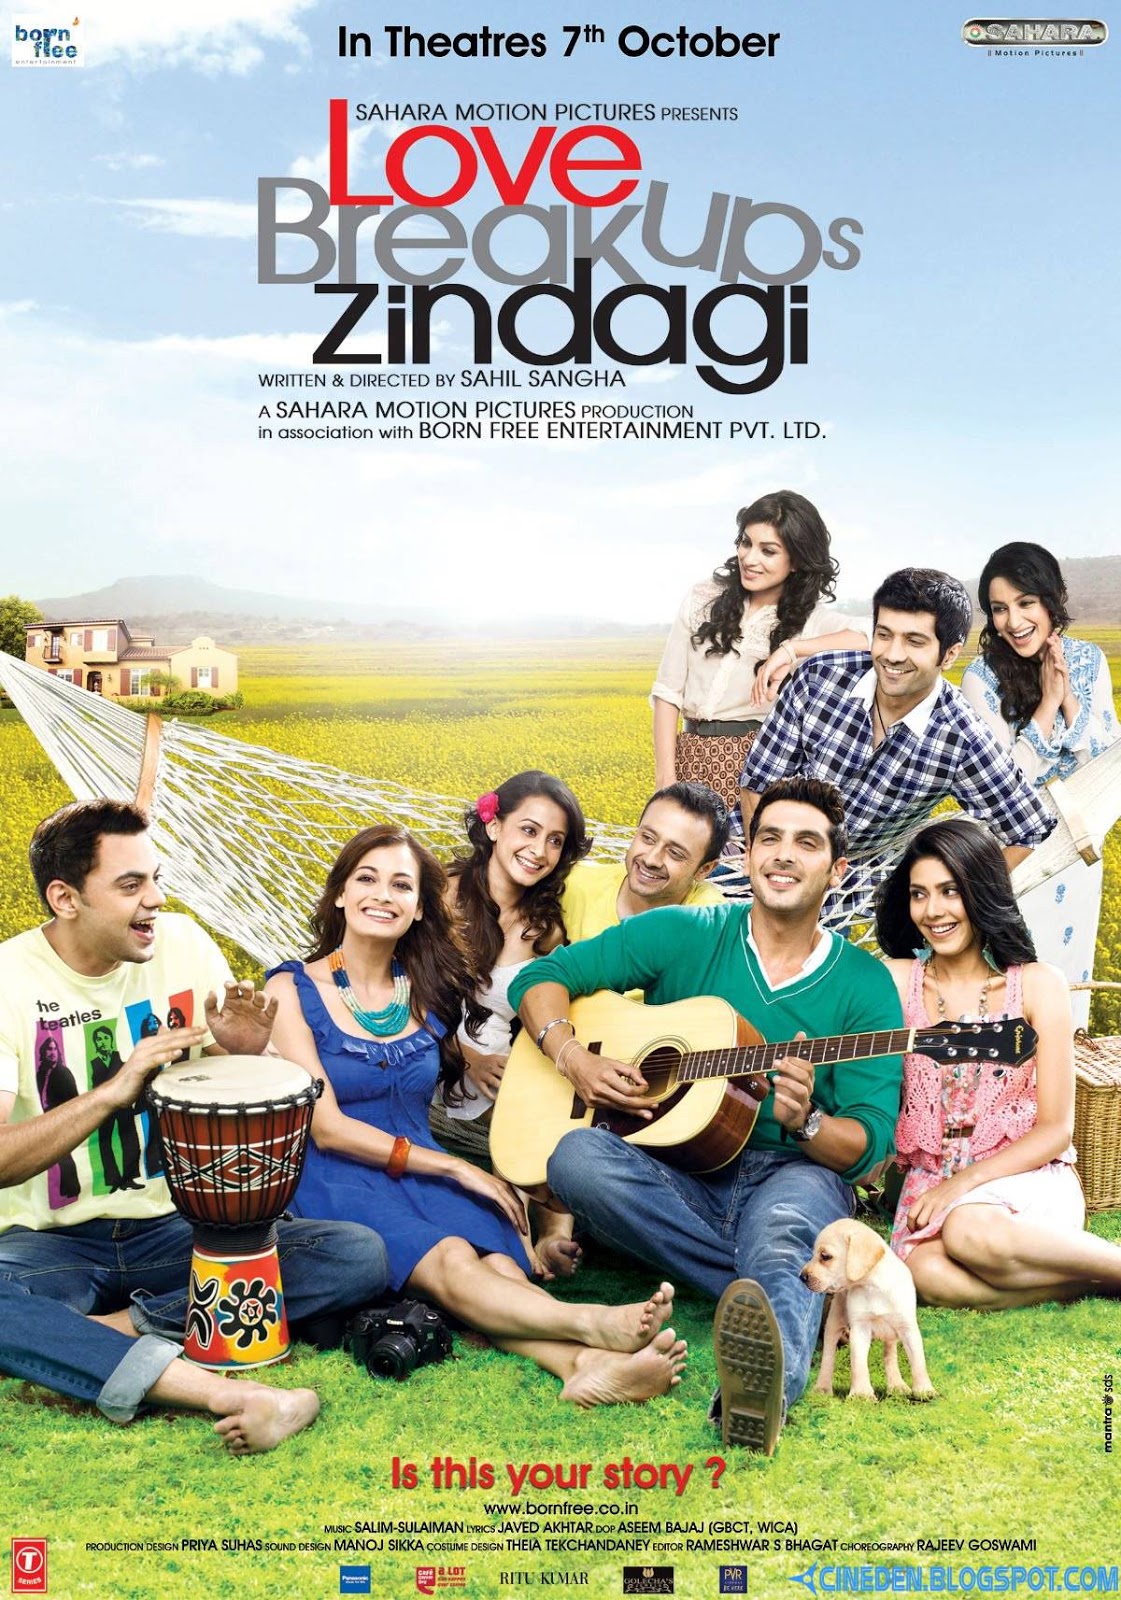 Love Breakups Zindagi (2011) - Hindi Movie Review